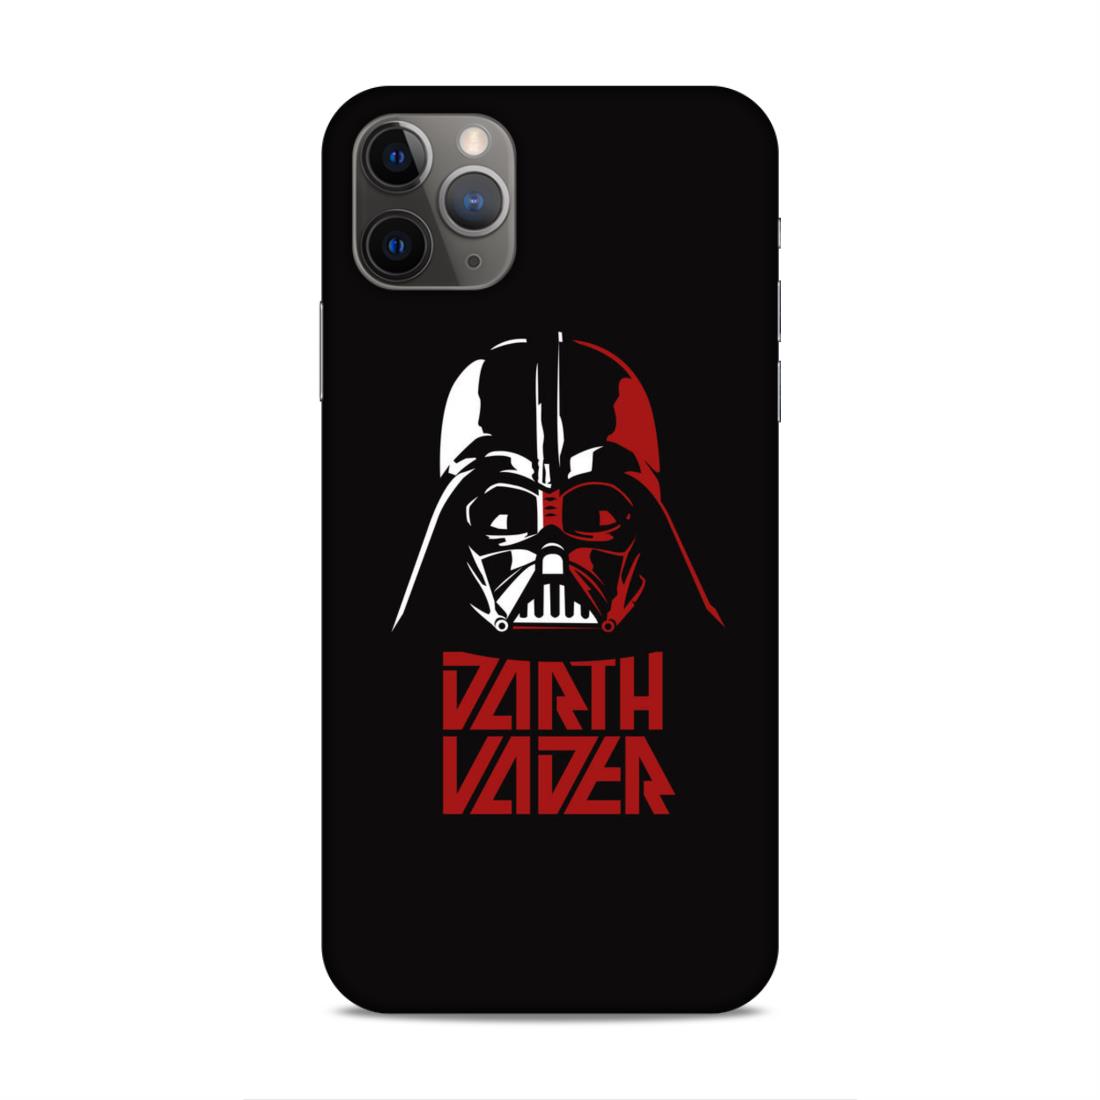 Darth Vader Hard Back Case For Apple iPhone 11 Pro Max